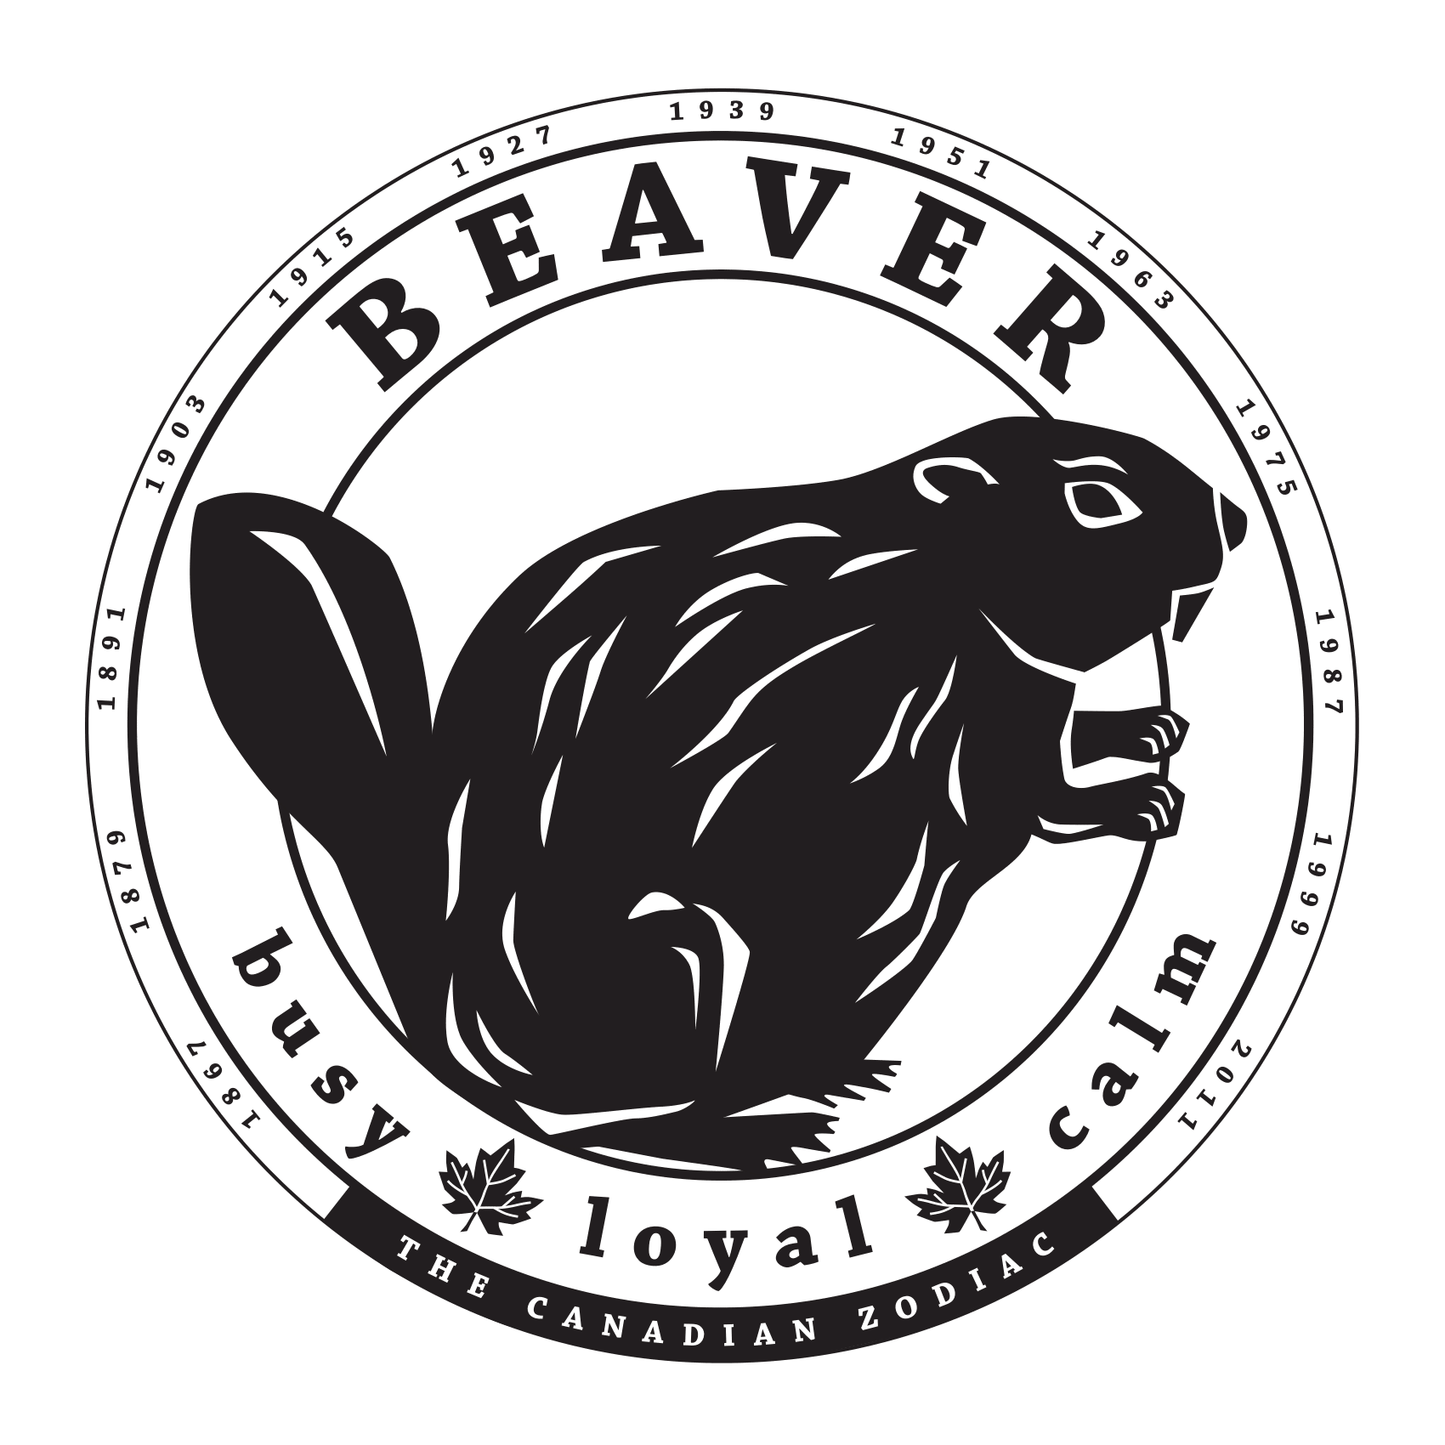 Beaver T-Shirt